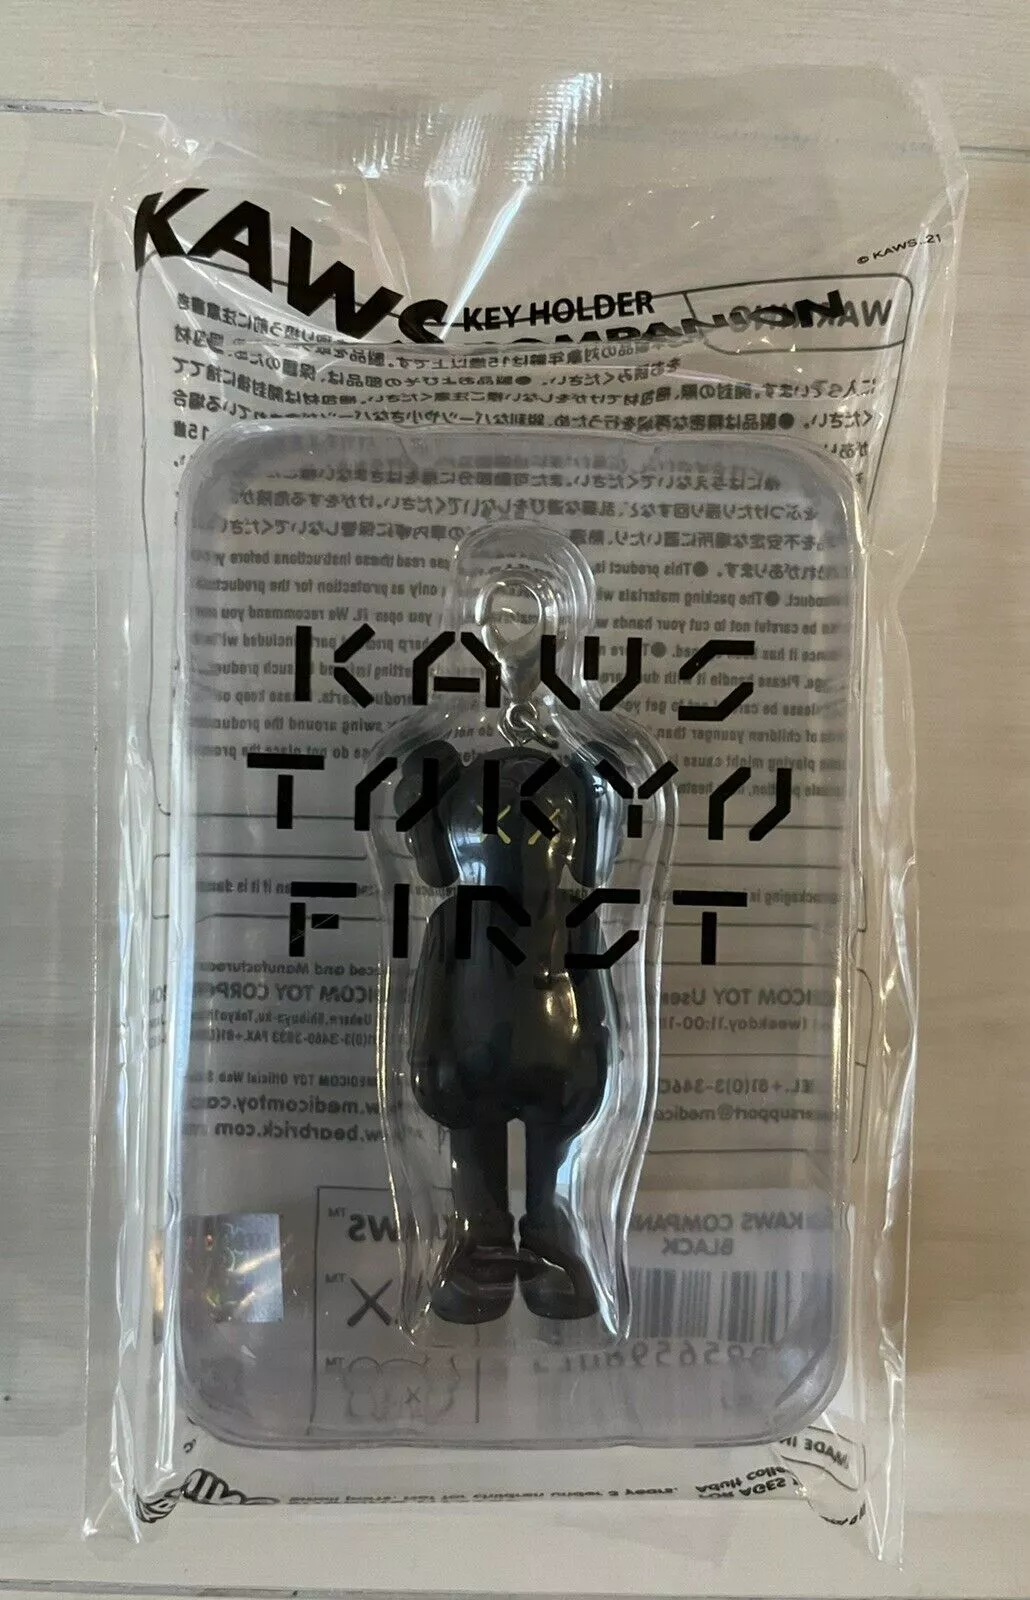 KAWS Tokyo First Companion Keychain Set (2021) Black/Brown/Grey - US